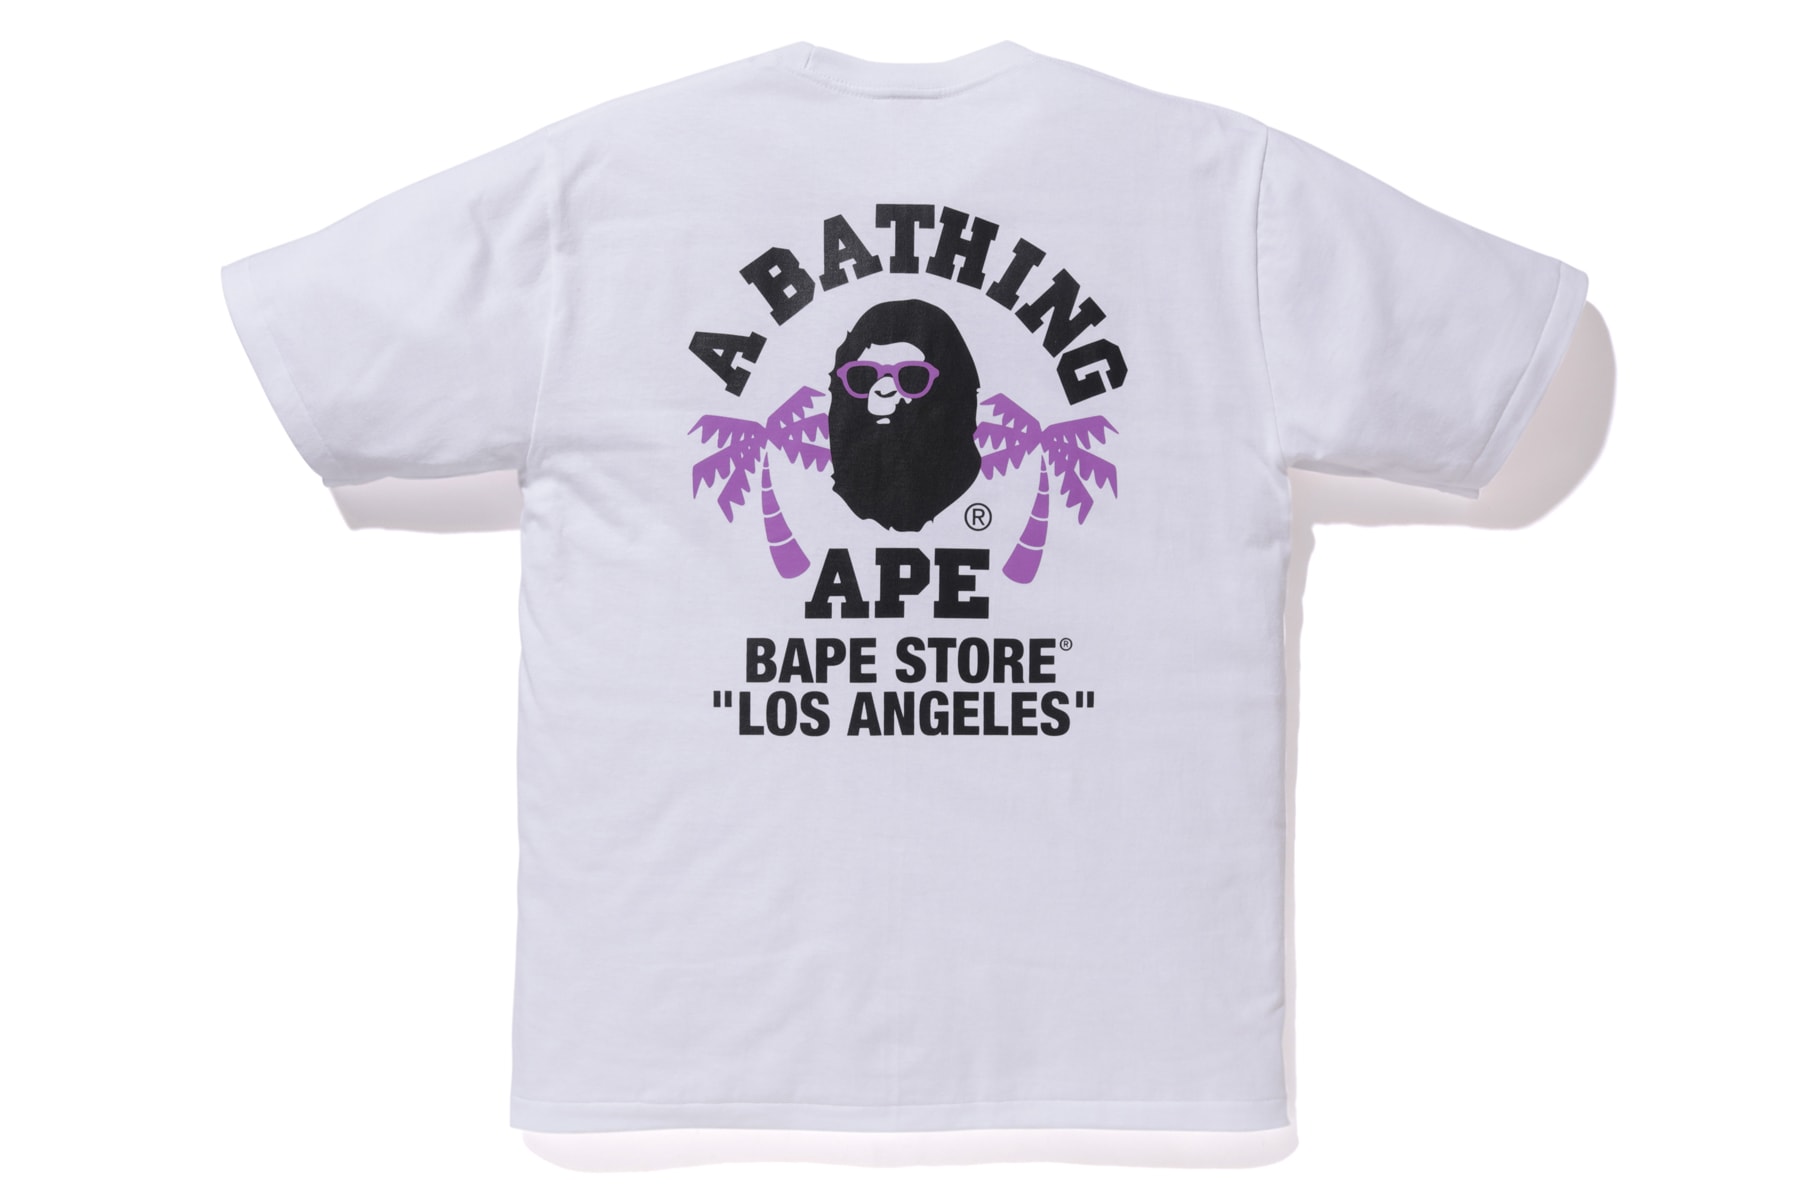 BAPE Exclusive LA Capsule Lookbook A Bathing Ape Los Angeles